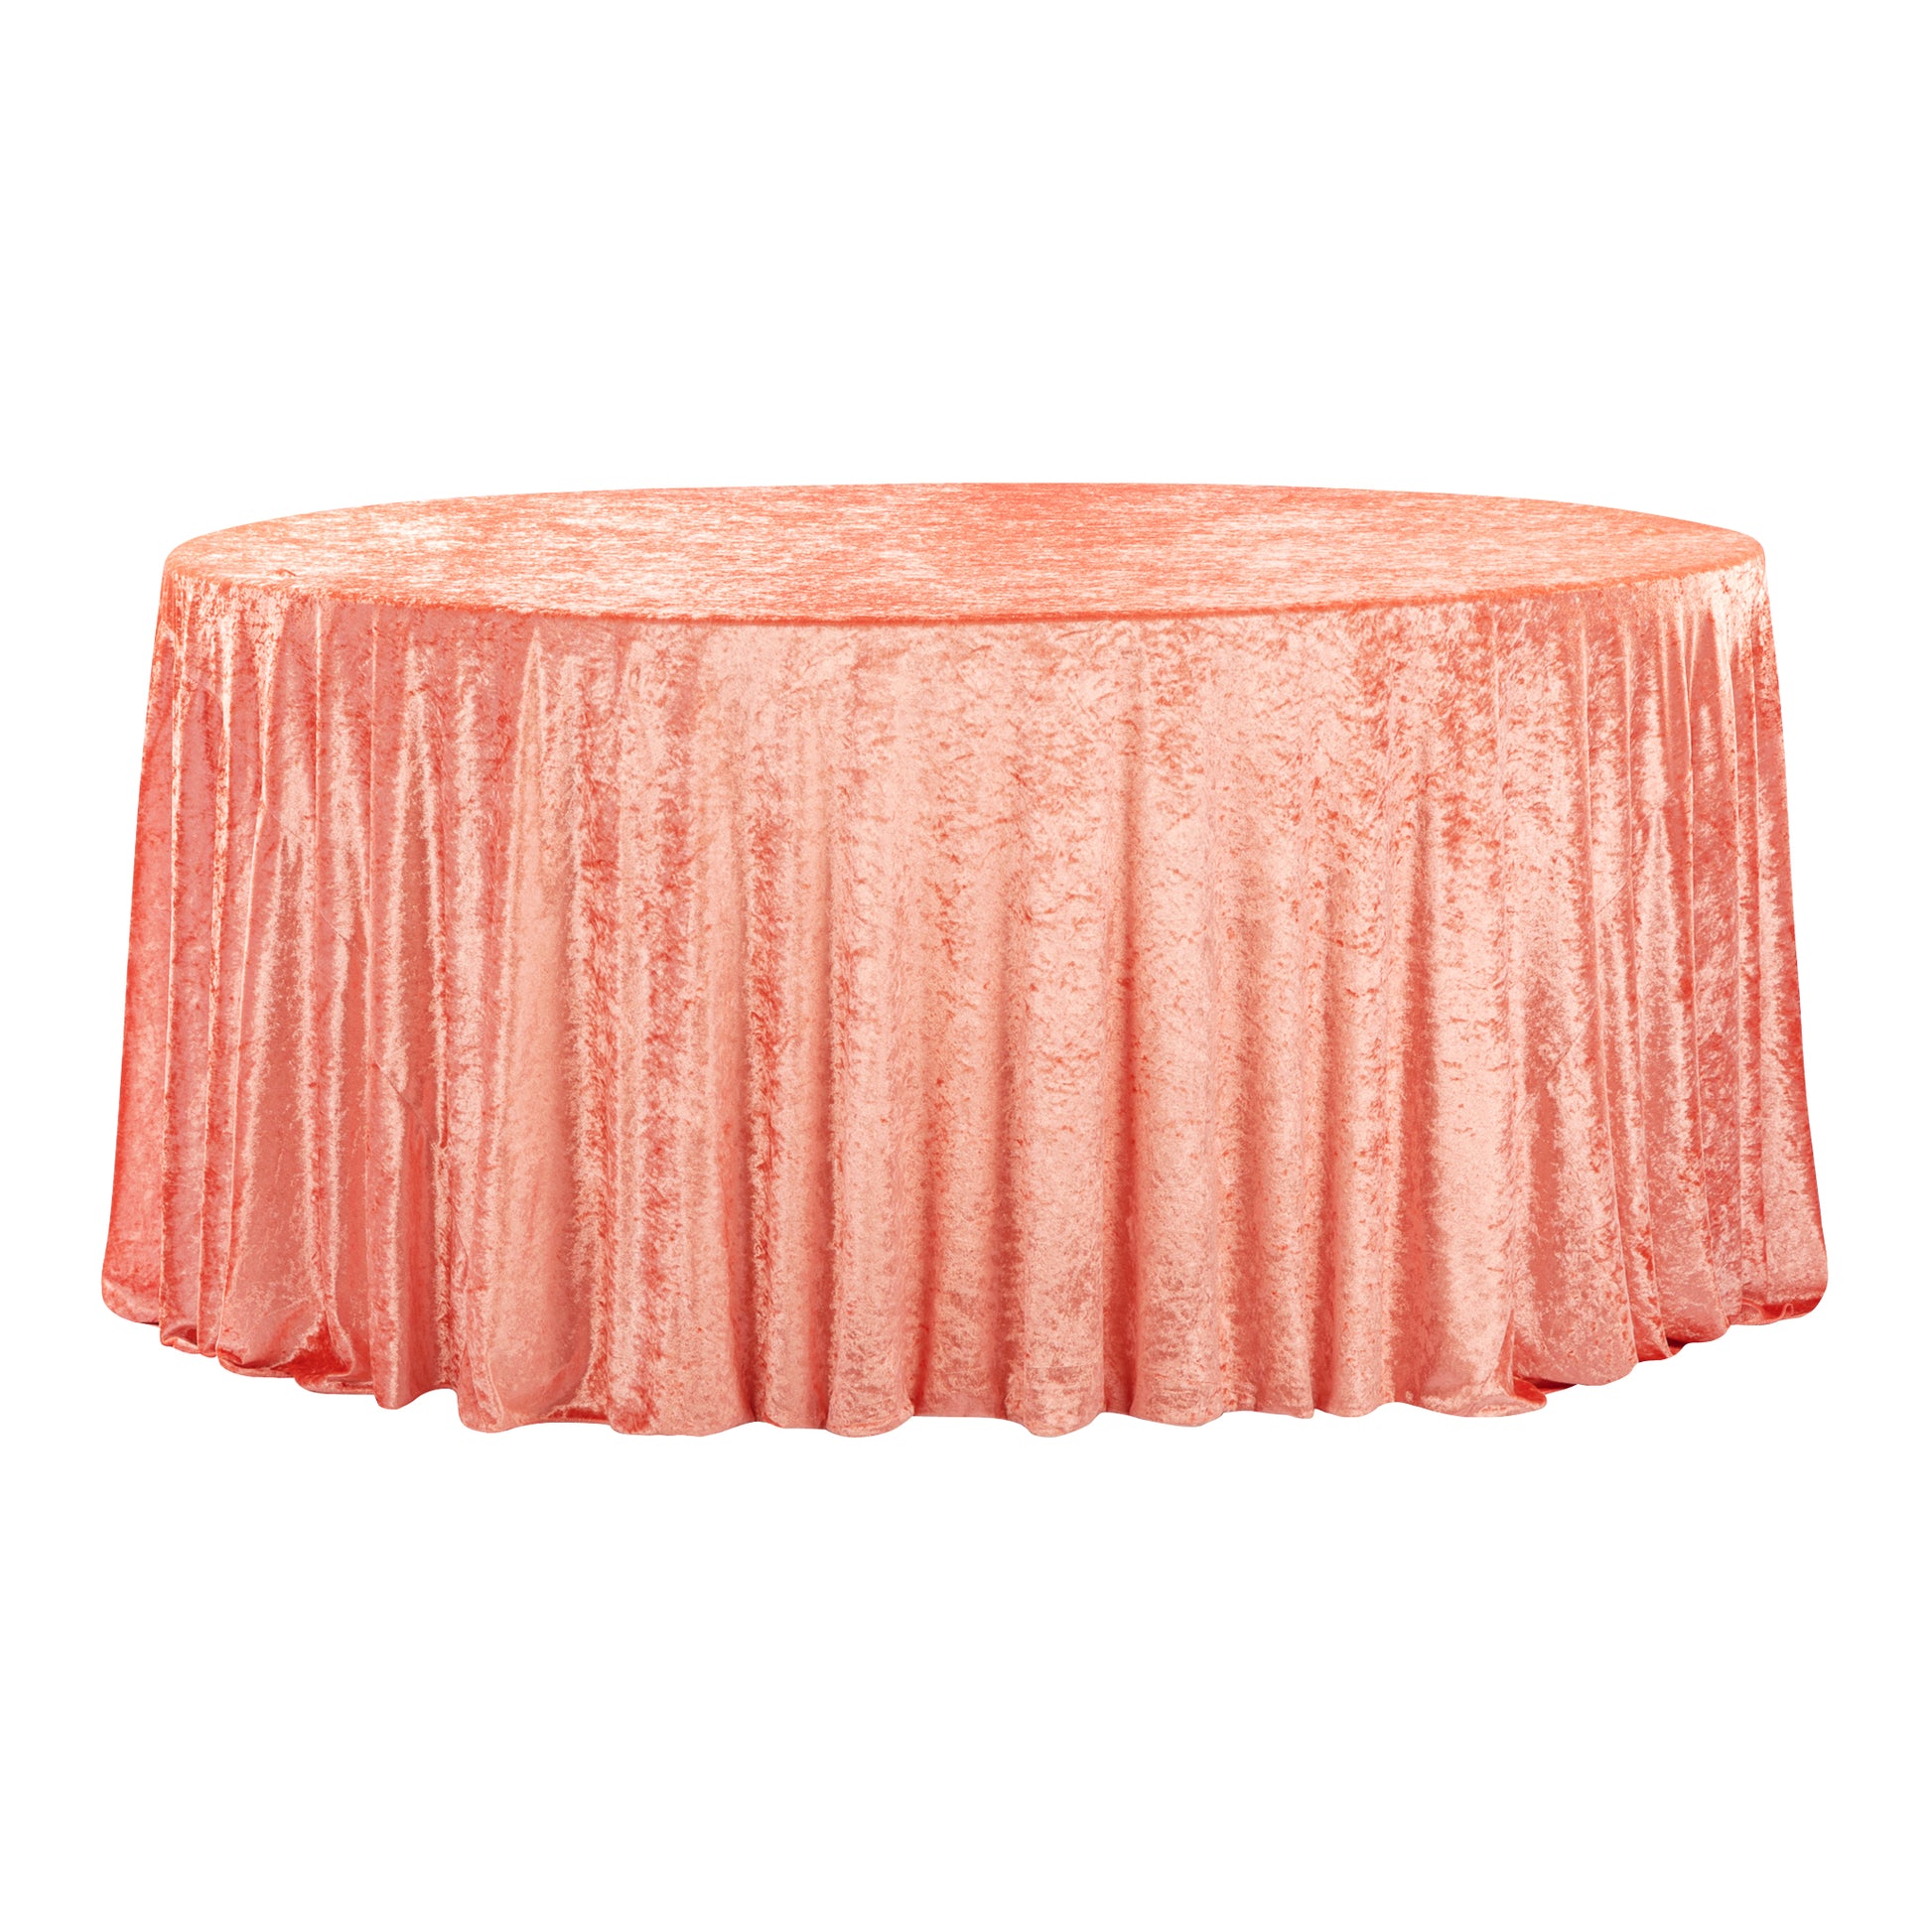 Velvet 120" Round Tablecloth - Coral - CV Linens